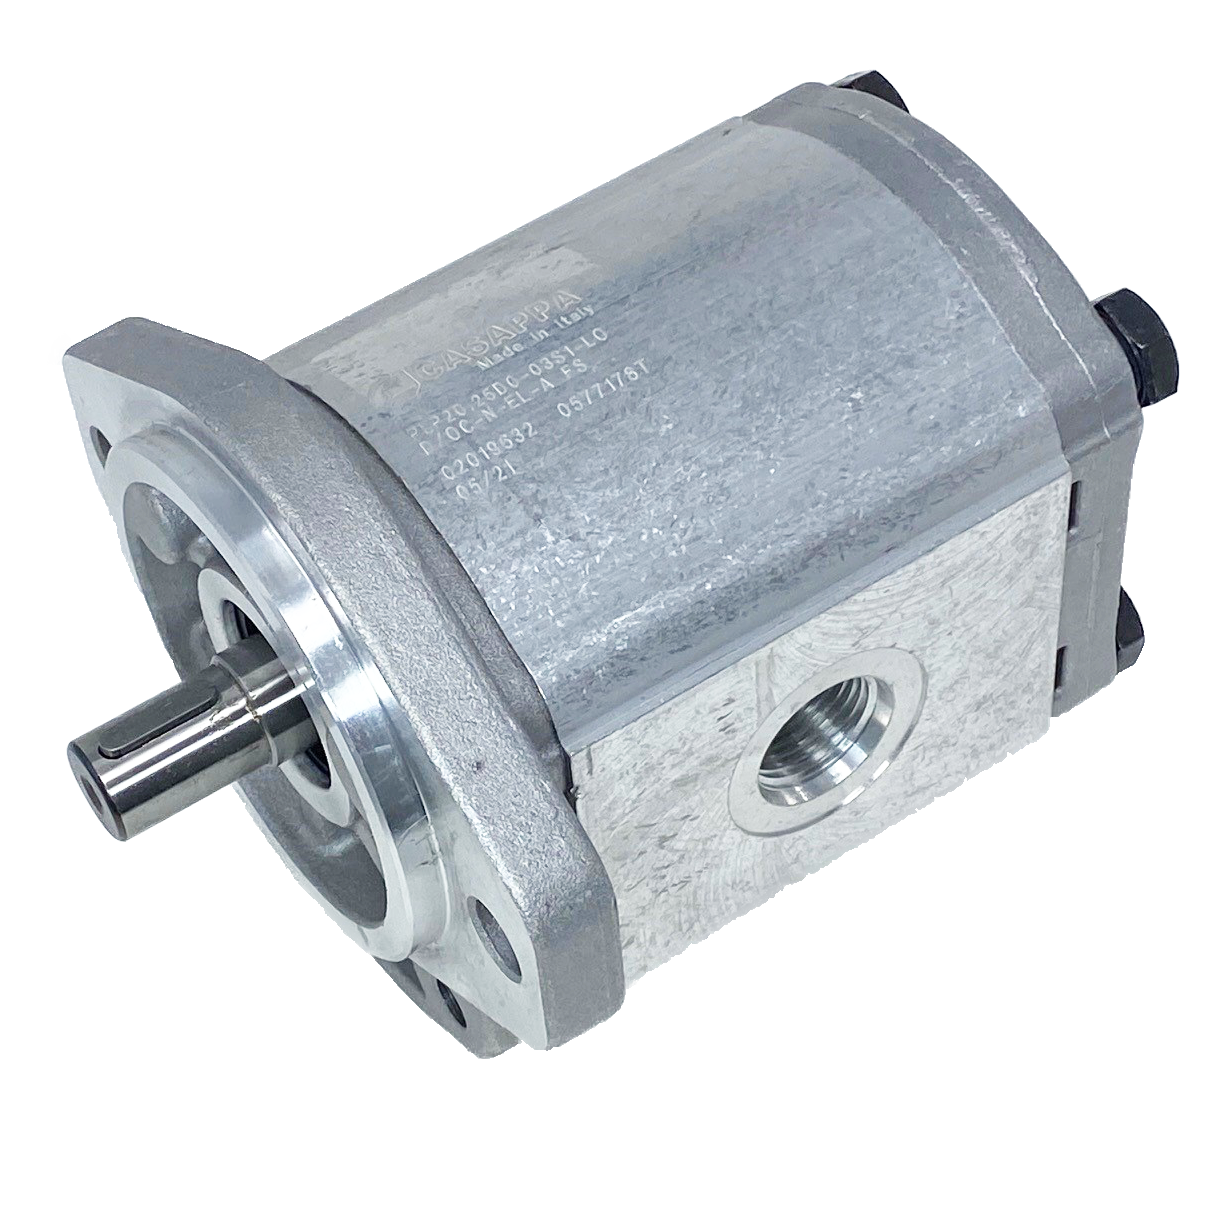 PHM20.27,8R0-31S9-LOC/OG-N-EL : Casappa Polaris Gear Motor, 28.21cc, 2900psi, 2500RPM, Reversible, External Drain, 5/8" Bore x 5/32" Key Shaft, SAE A 2-Bolt Flange, 0.625 (5/8") #10 SAE In, 1.25" #20 SAE Out, Cast Iron Body, Aluminum Flange